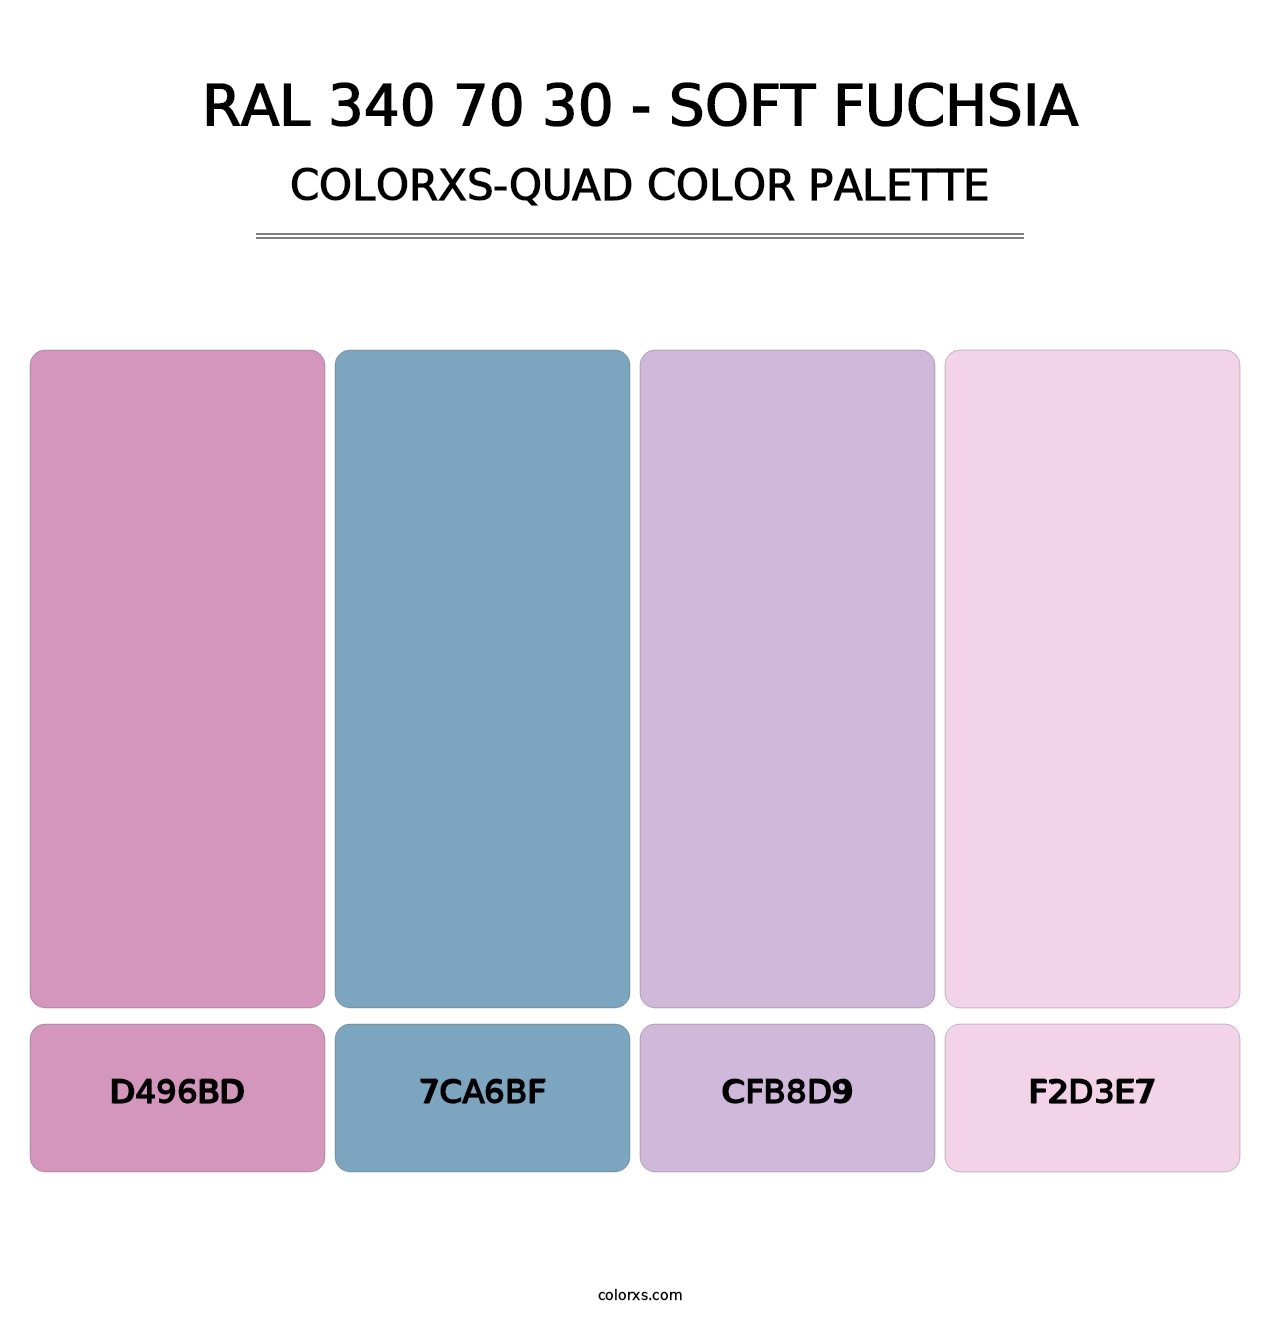 RAL 340 70 30 - Soft Fuchsia - Colorxs Quad Palette